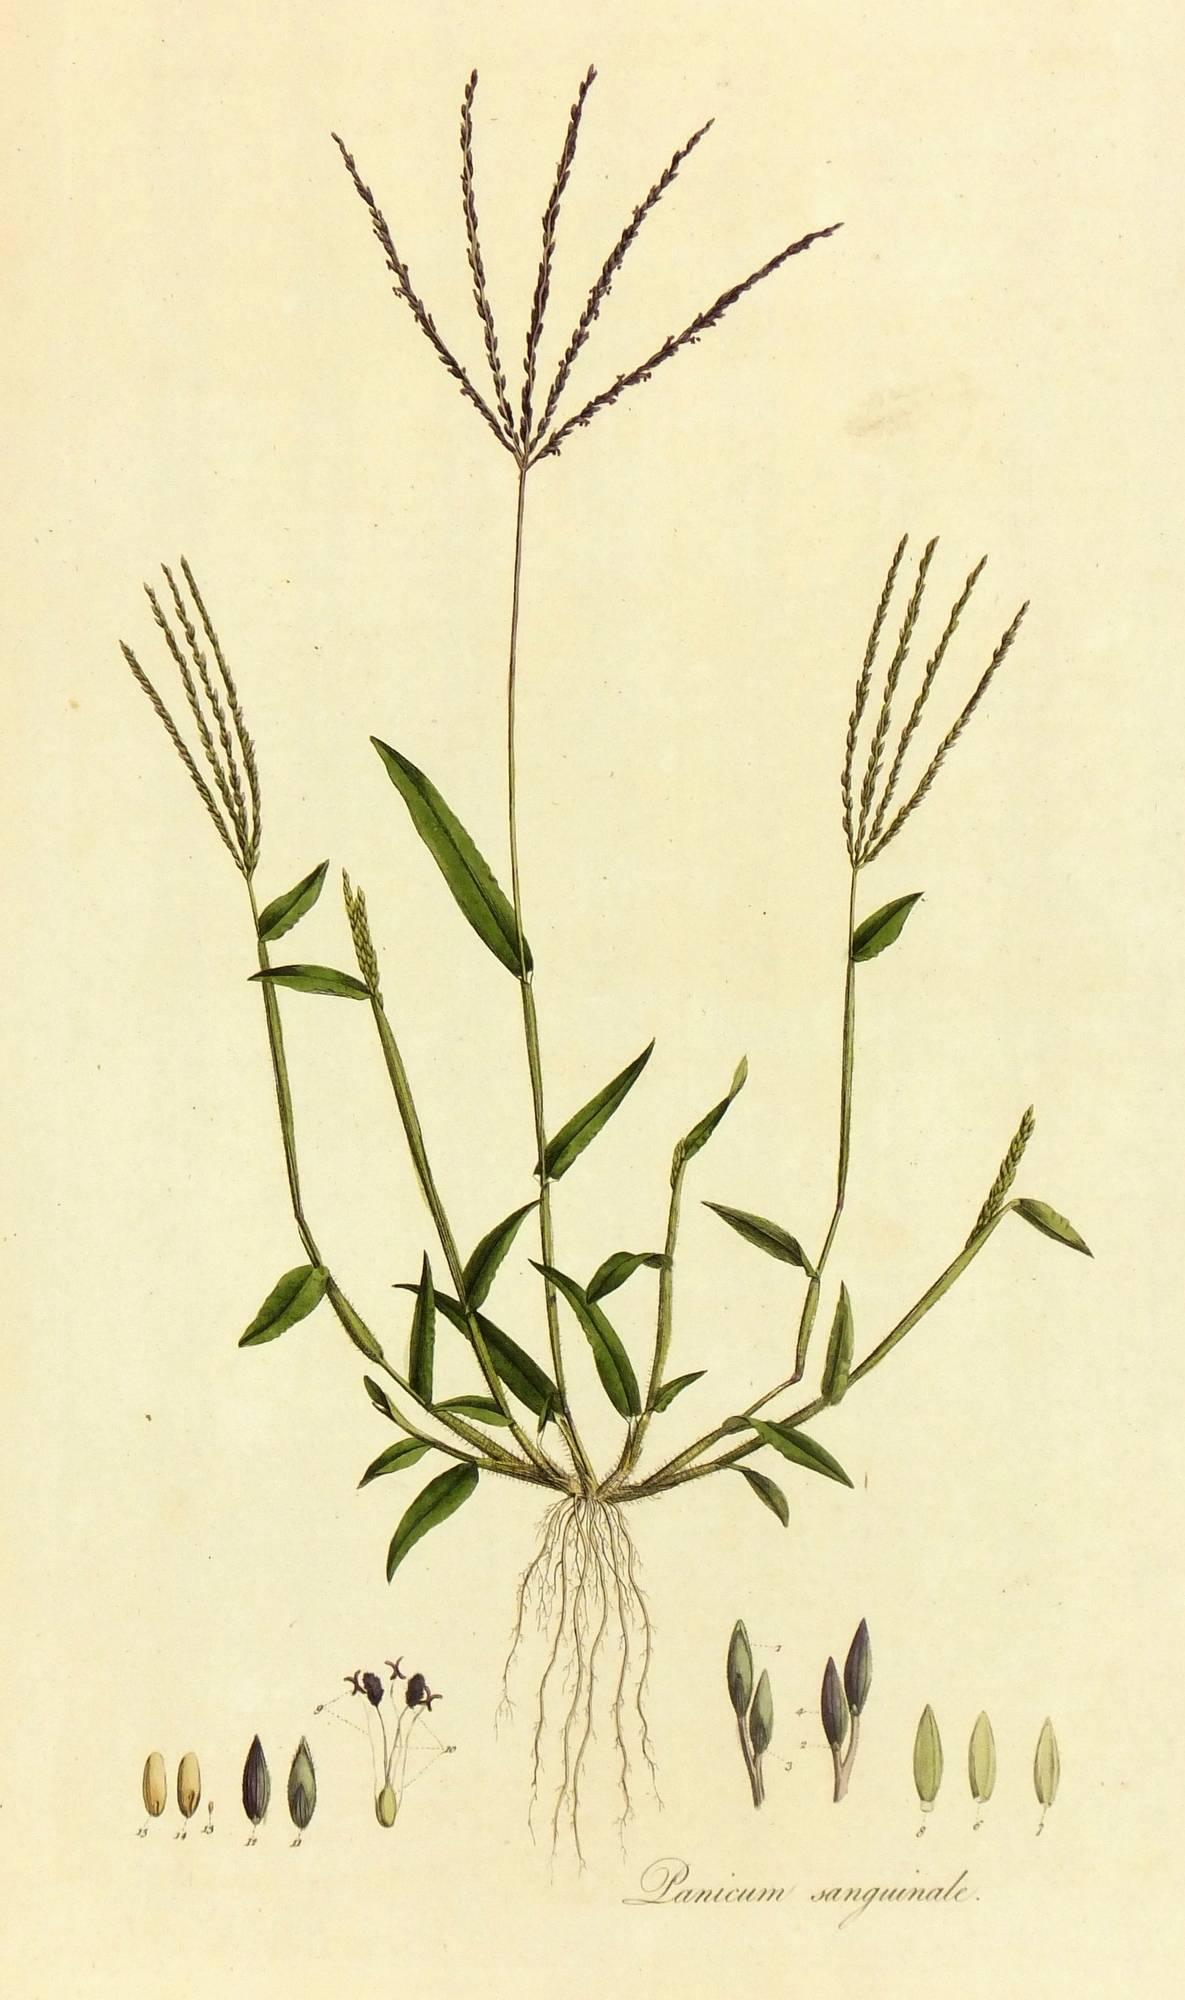 William Curtis Still-Life Print - Panicum sanguinale, from "Flora Londinensis..."